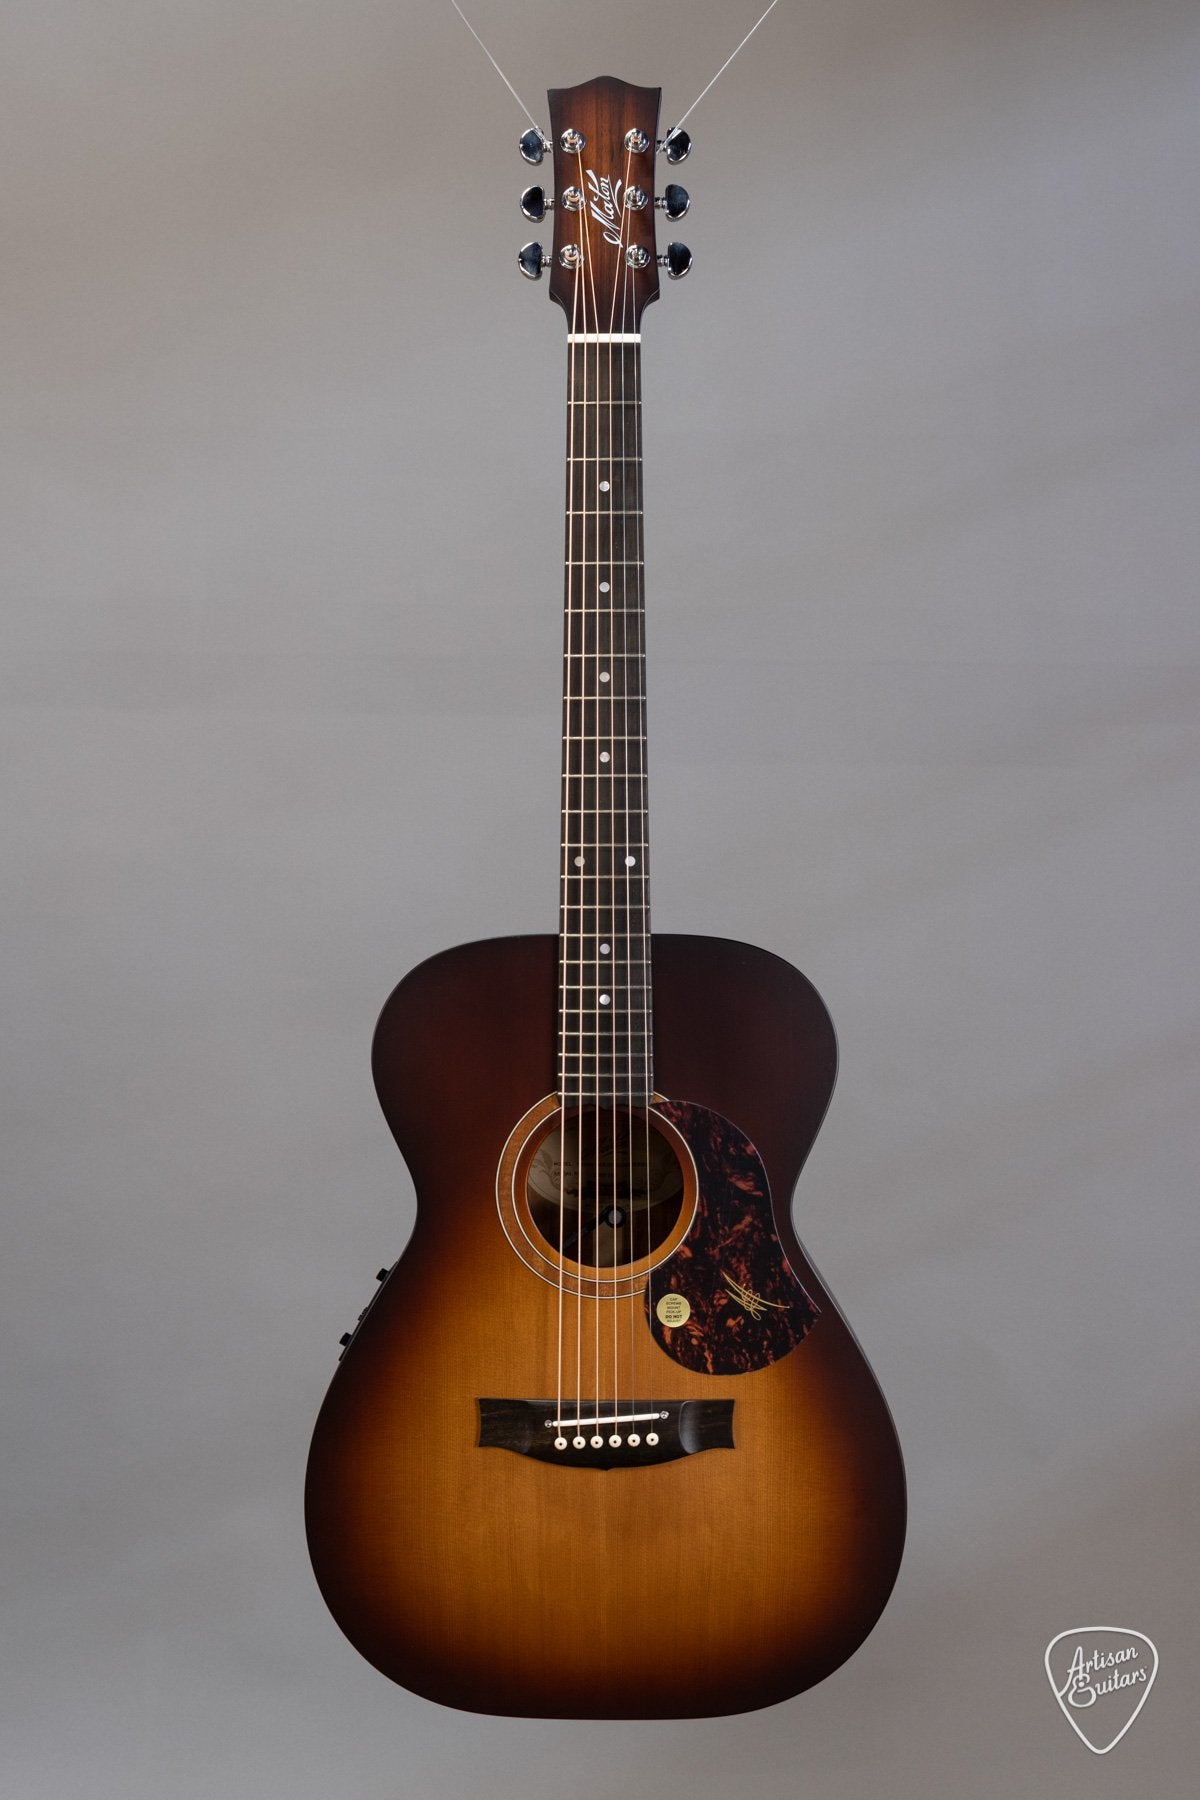 Maton Guitars SRS808 with Tobacco Sunburst Red Cedar Top - ID 15084 - Artisan Guitars